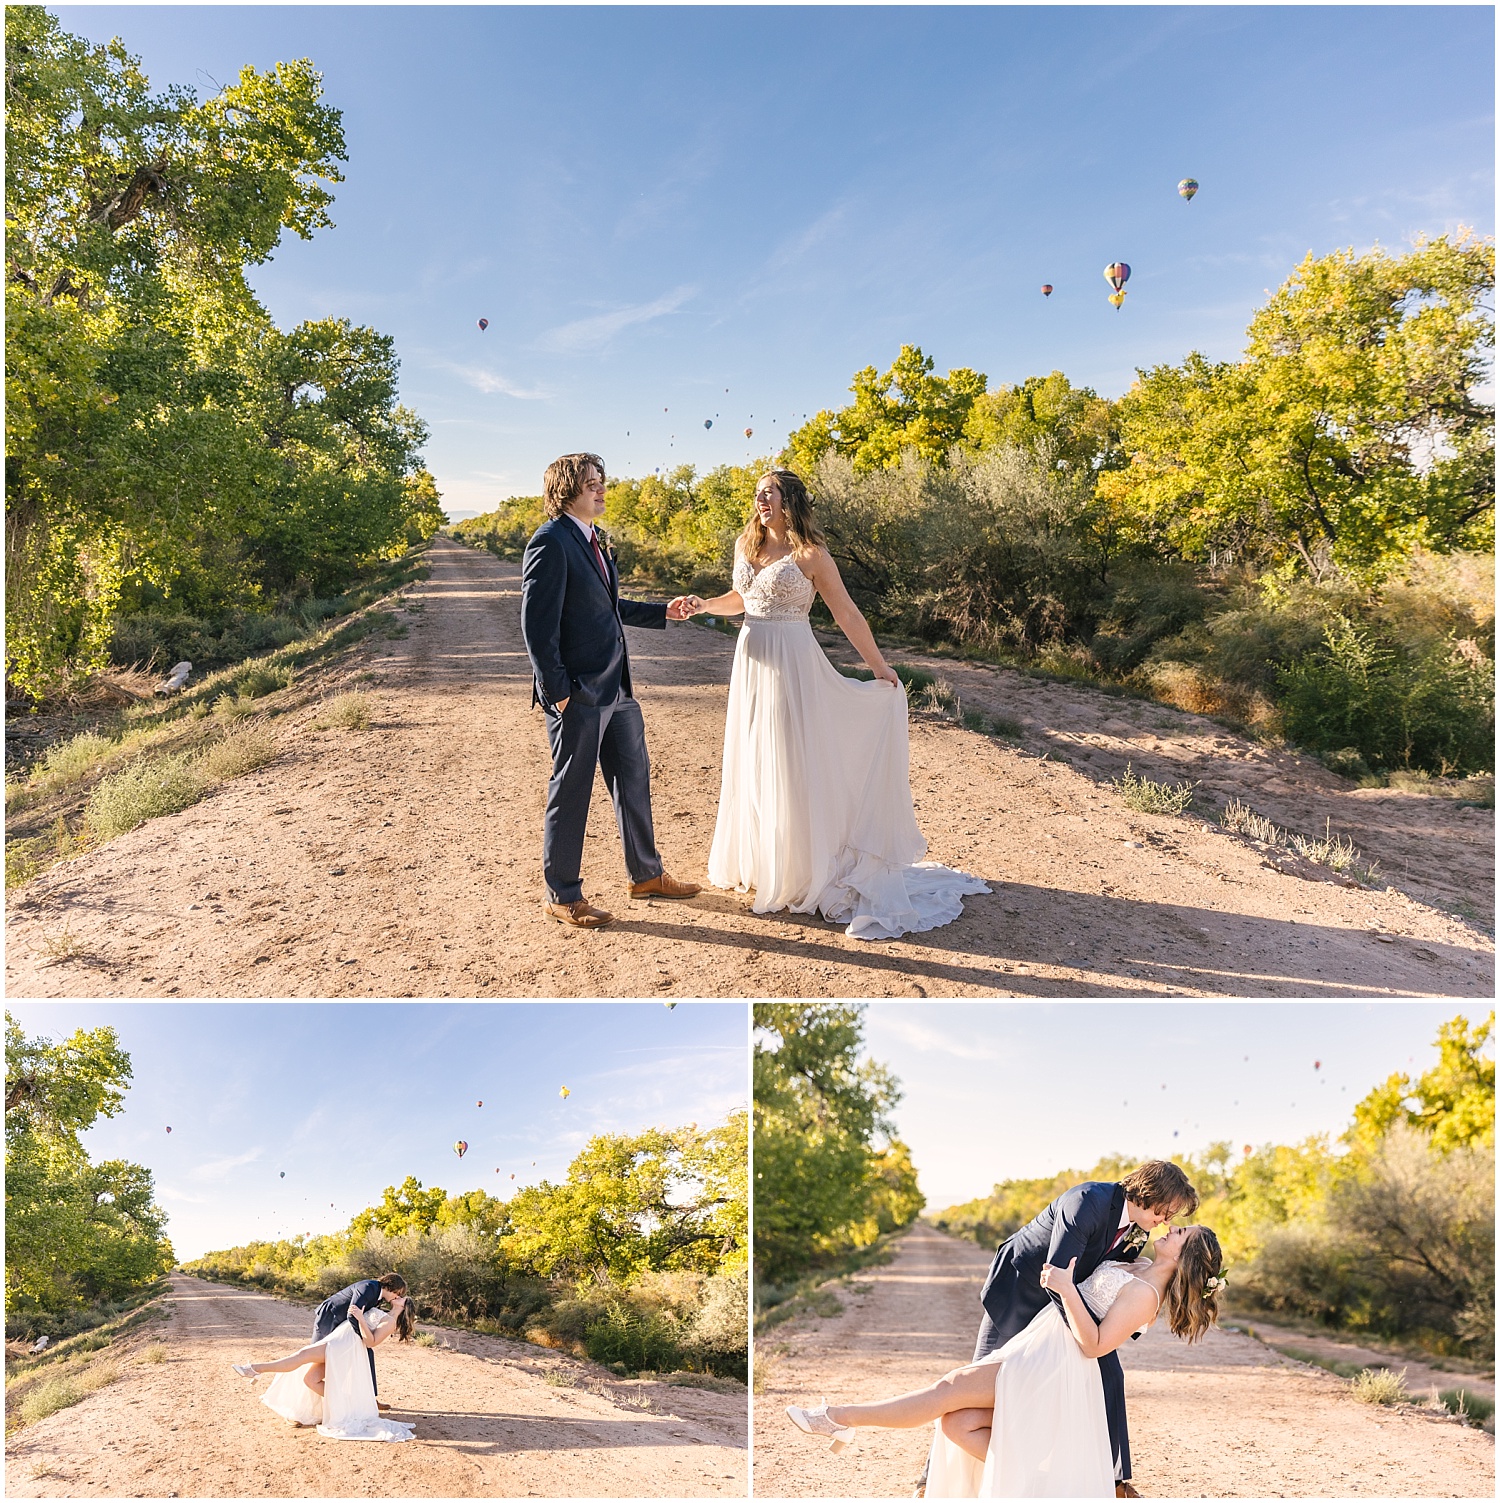 Bride and groom kissing under hot air balloons for their Albuquerque Balloon Fiesta elopement